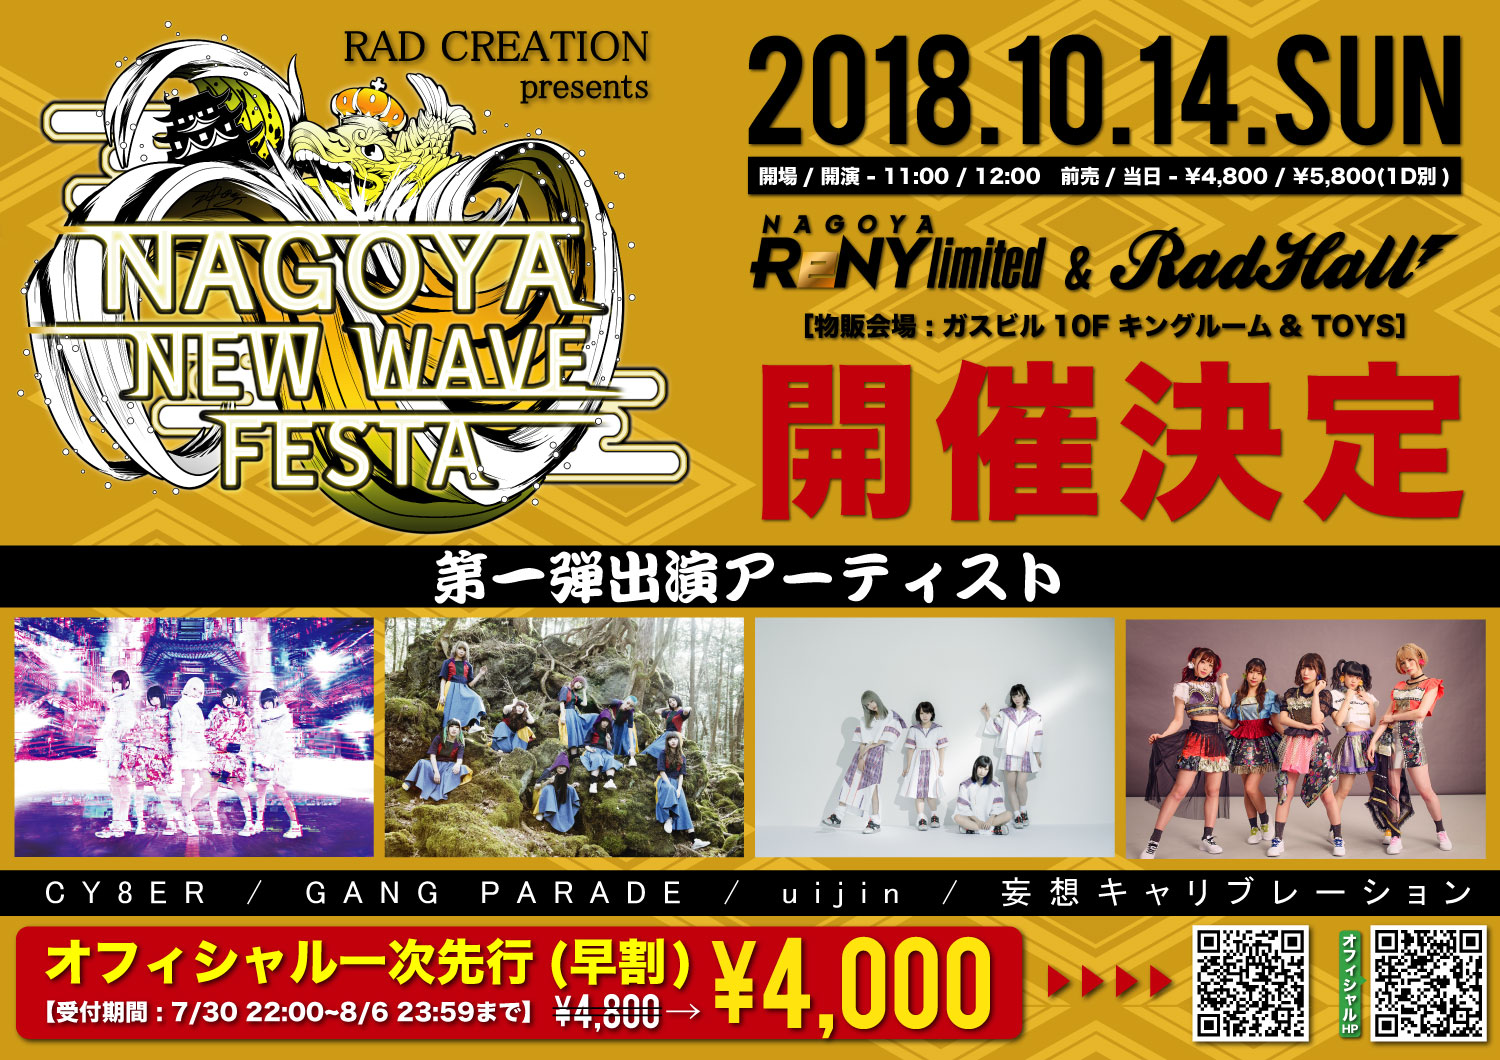 RAD CREATION presents NAGOYA NEW WAVE FEST